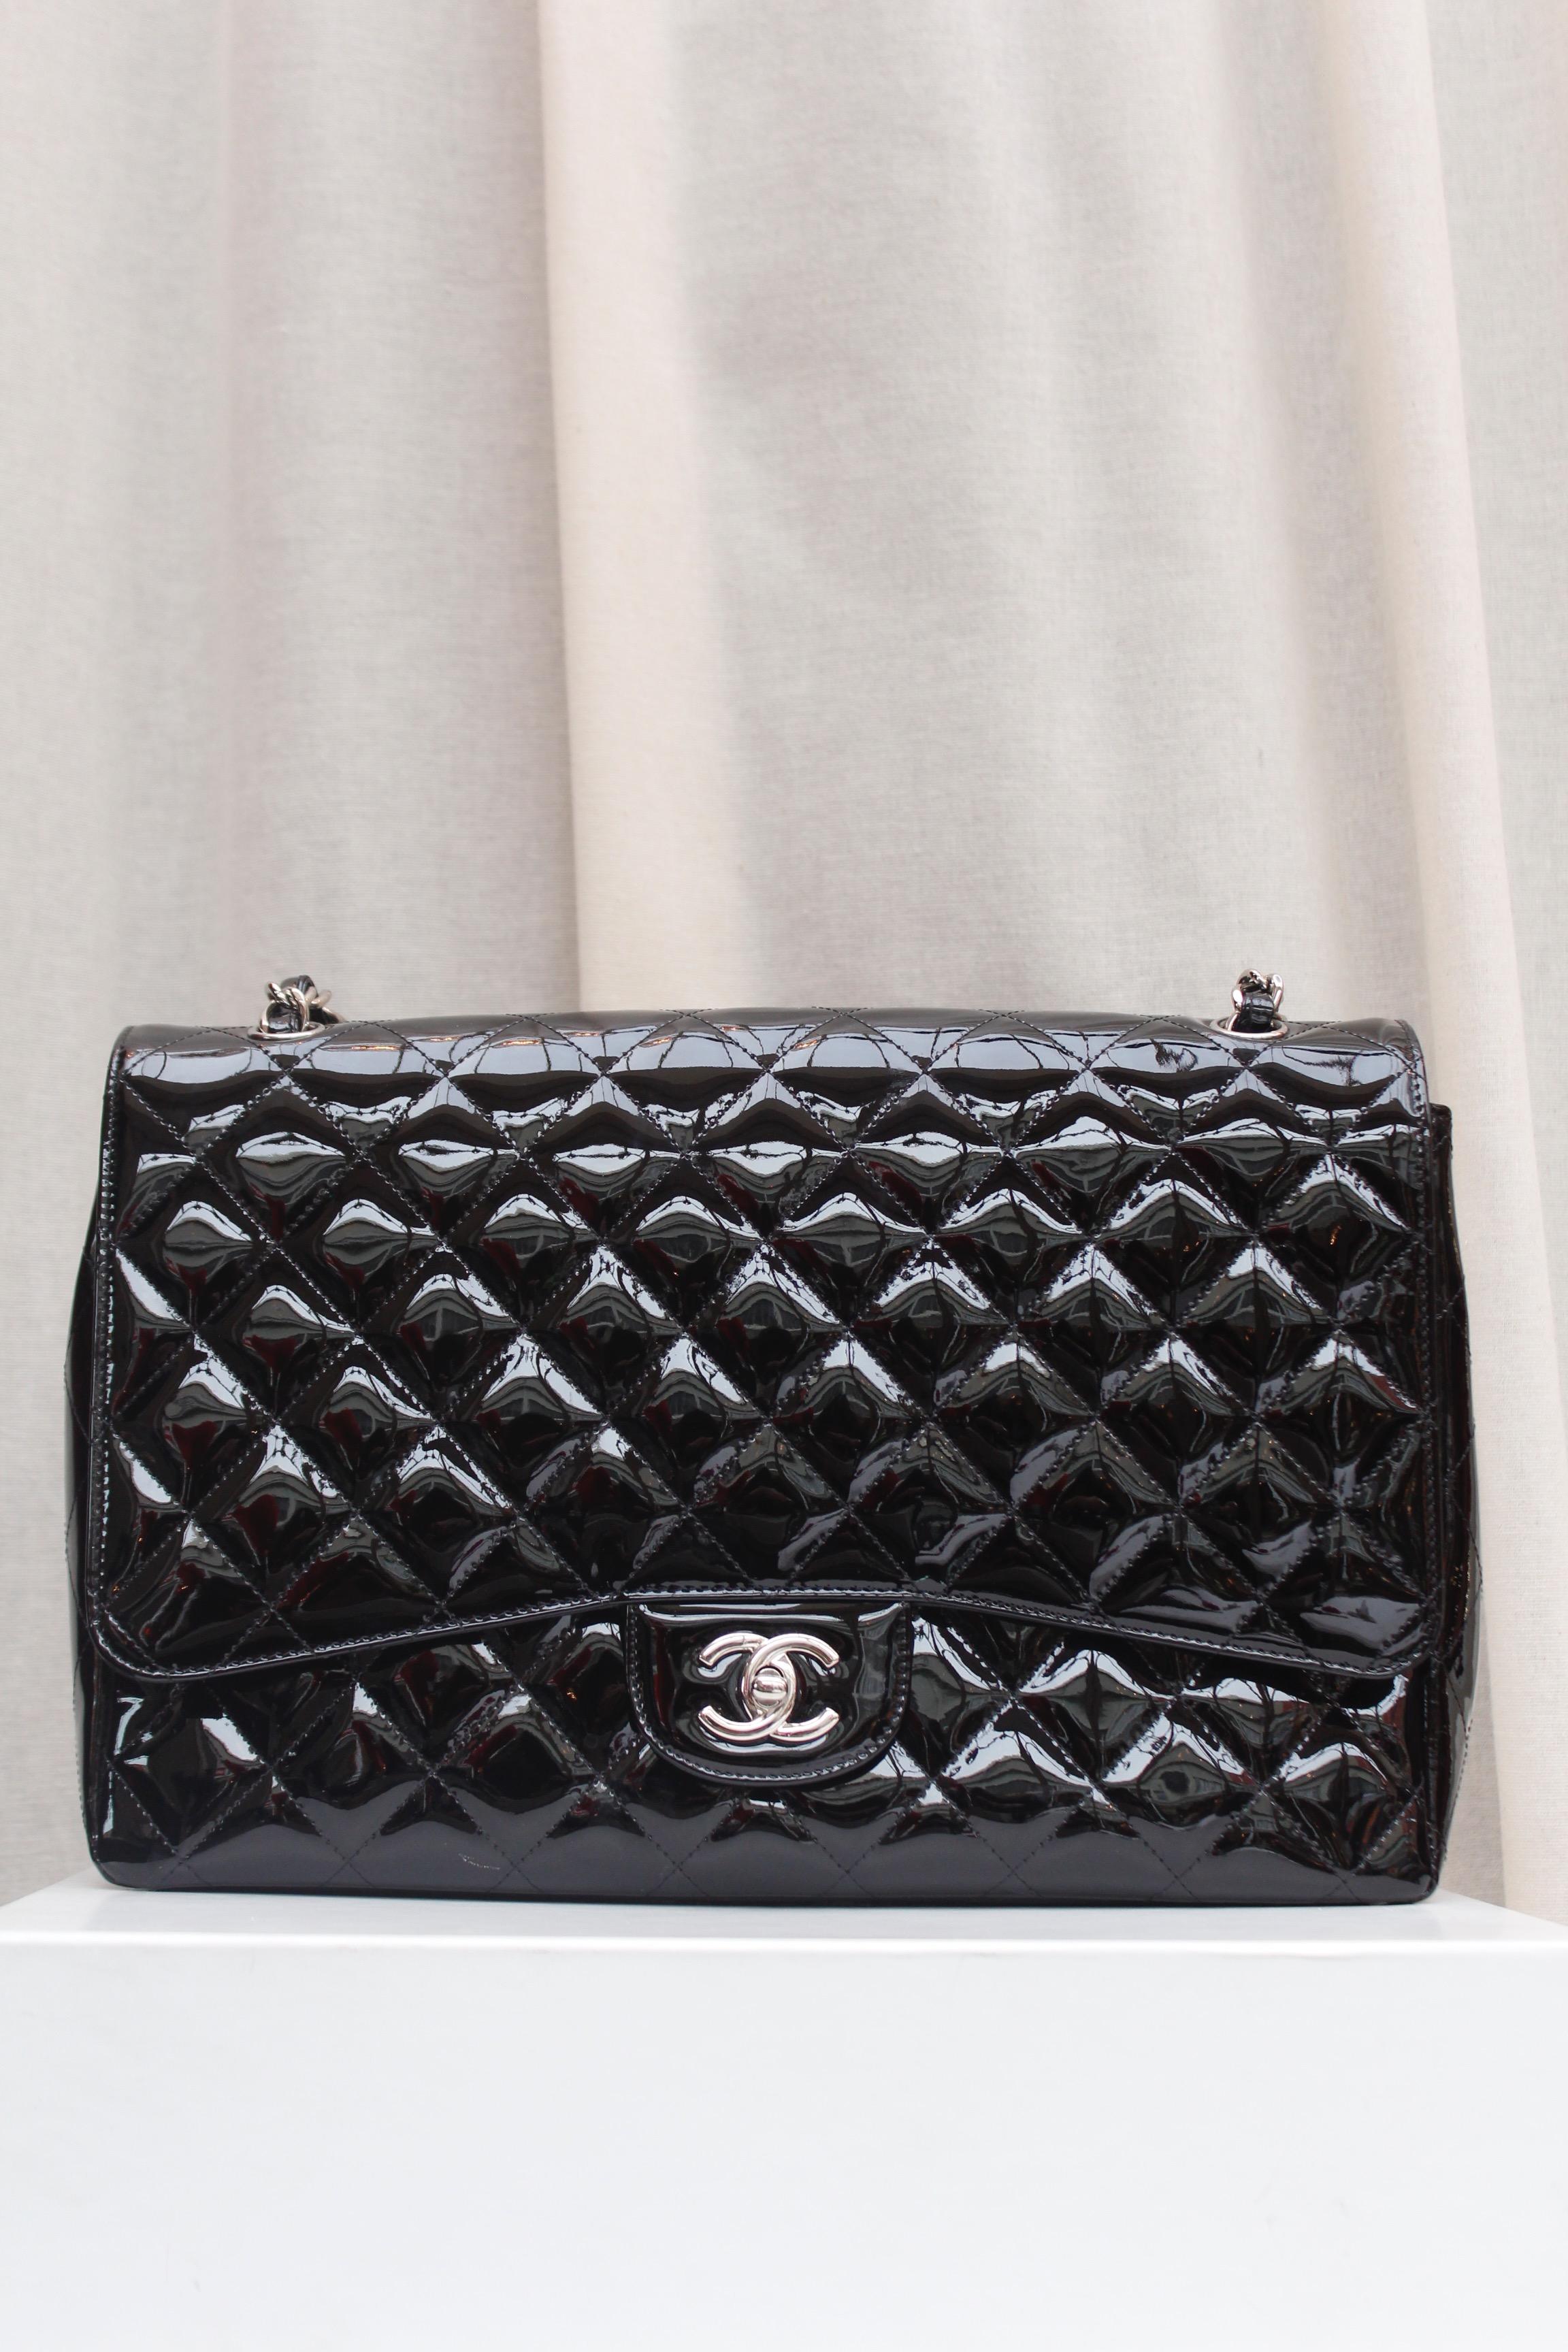 Black Chanel gorgeous black patent leather, 2009 – 2010